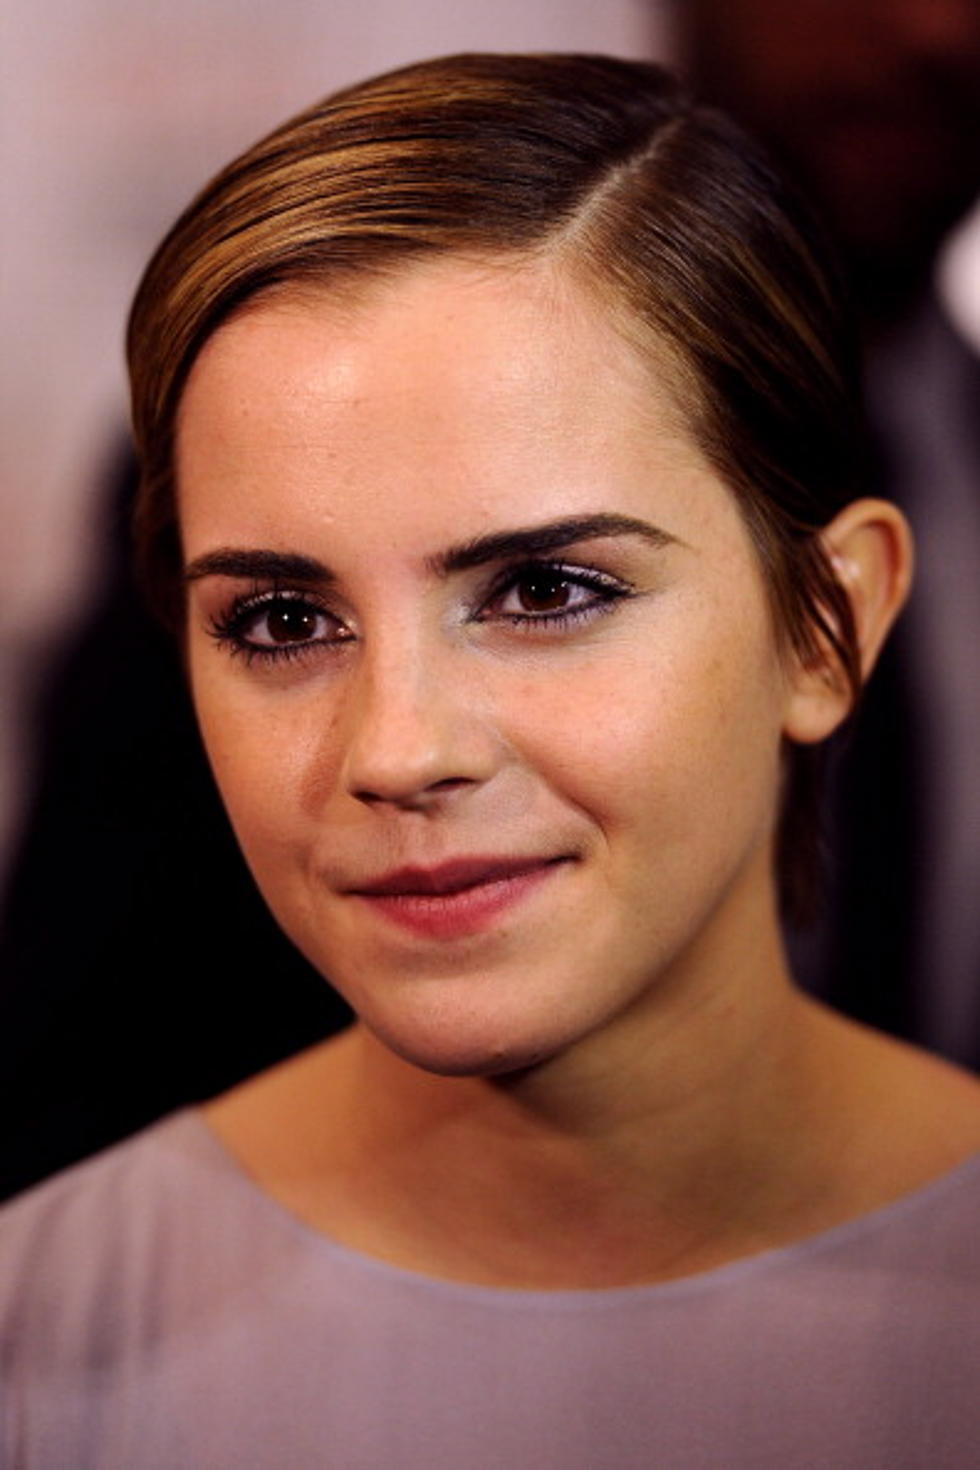 Is It Just Me Or Is Emma Watson Looking Kinda Lesbianish?